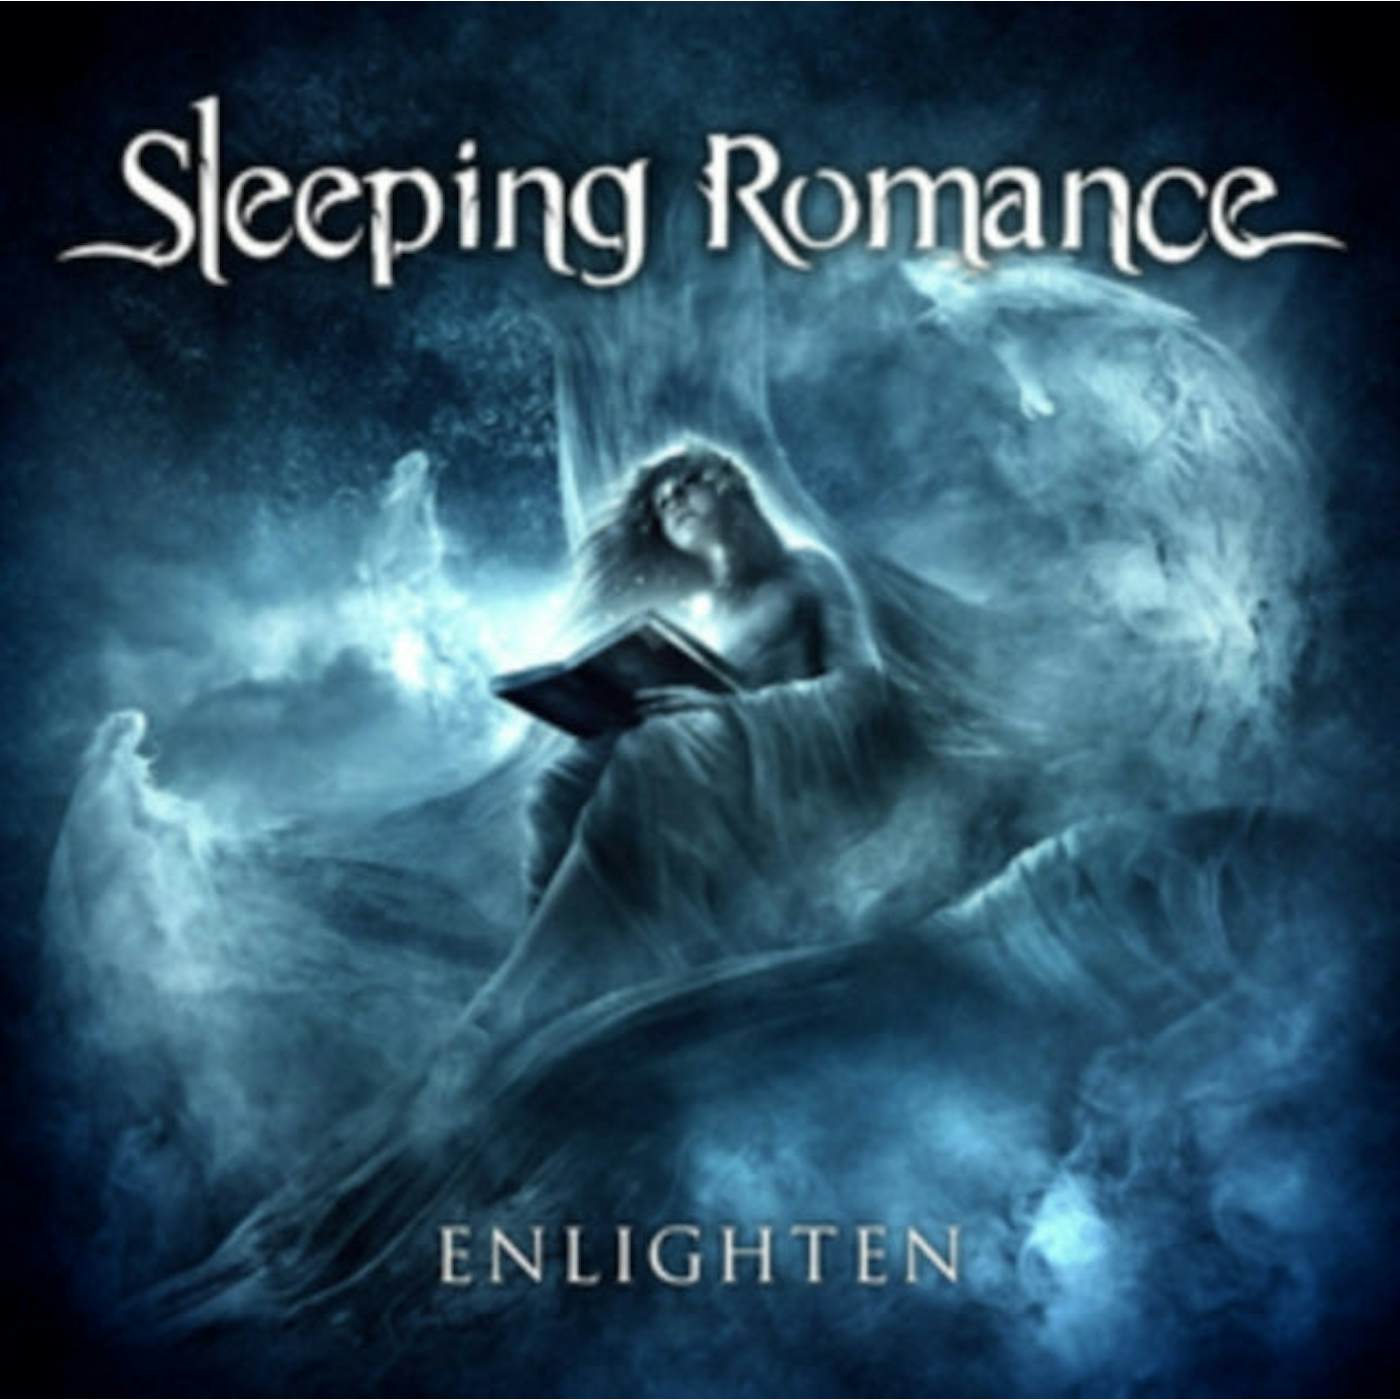 Sleeping Romance CD - Enlighten